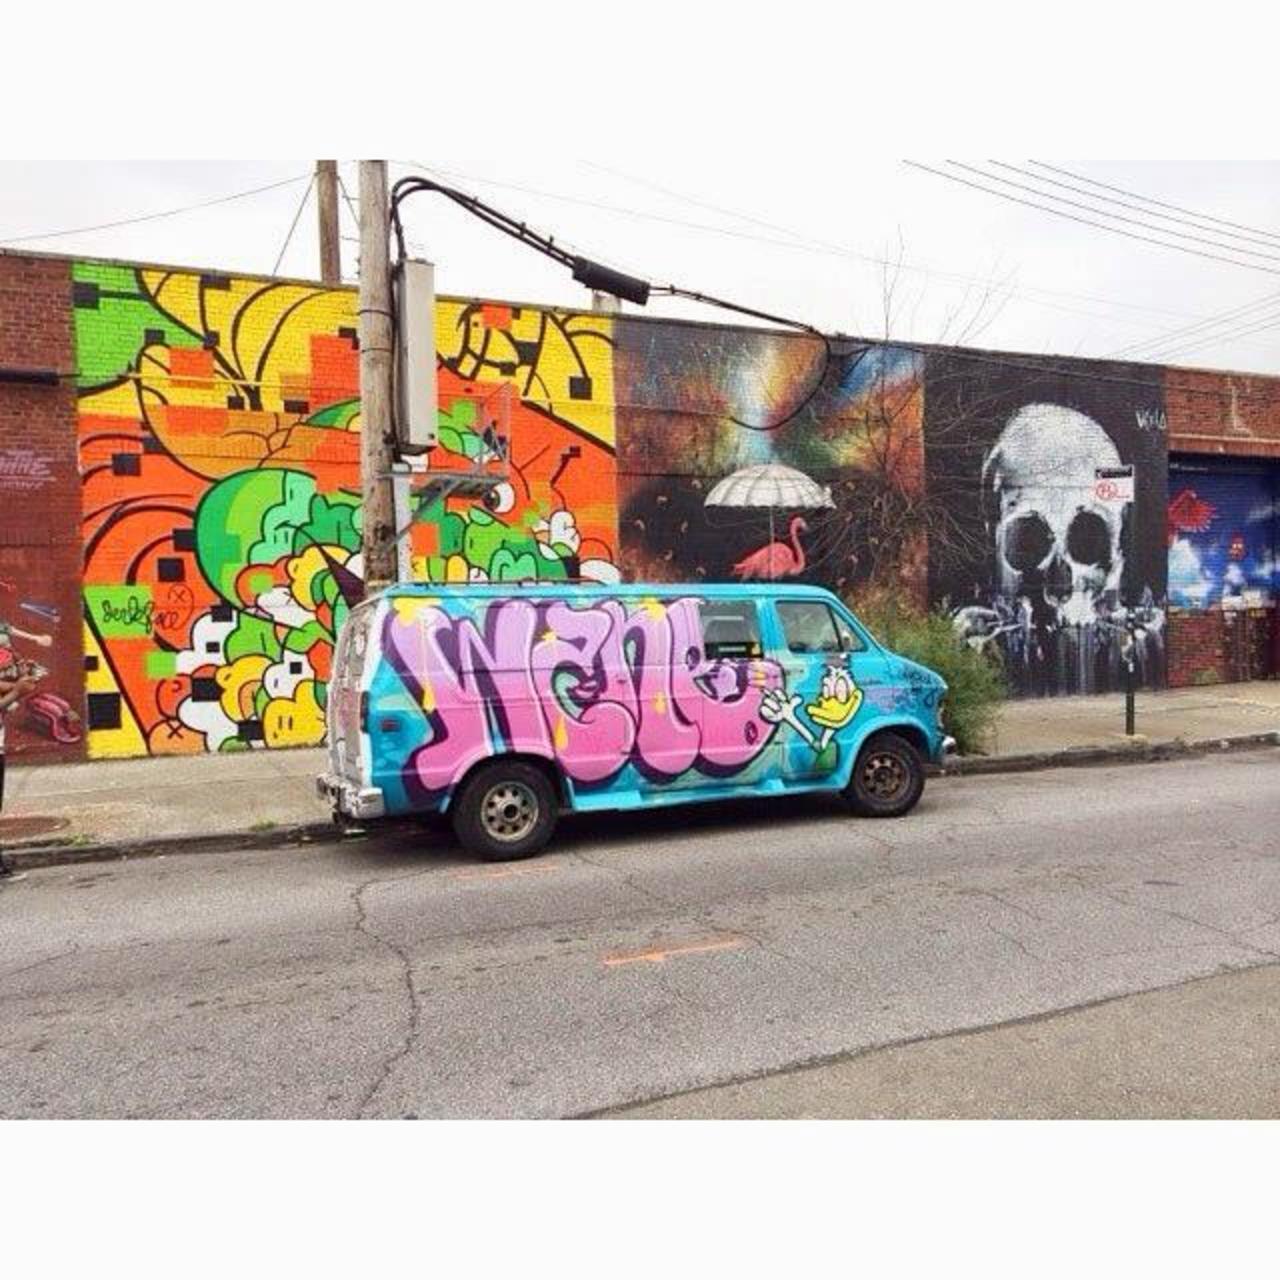 I saw this van in #brooklyn . Does anyone know of the #artist ? #streetart #graffiti https://t.co/SemGOb9JFk